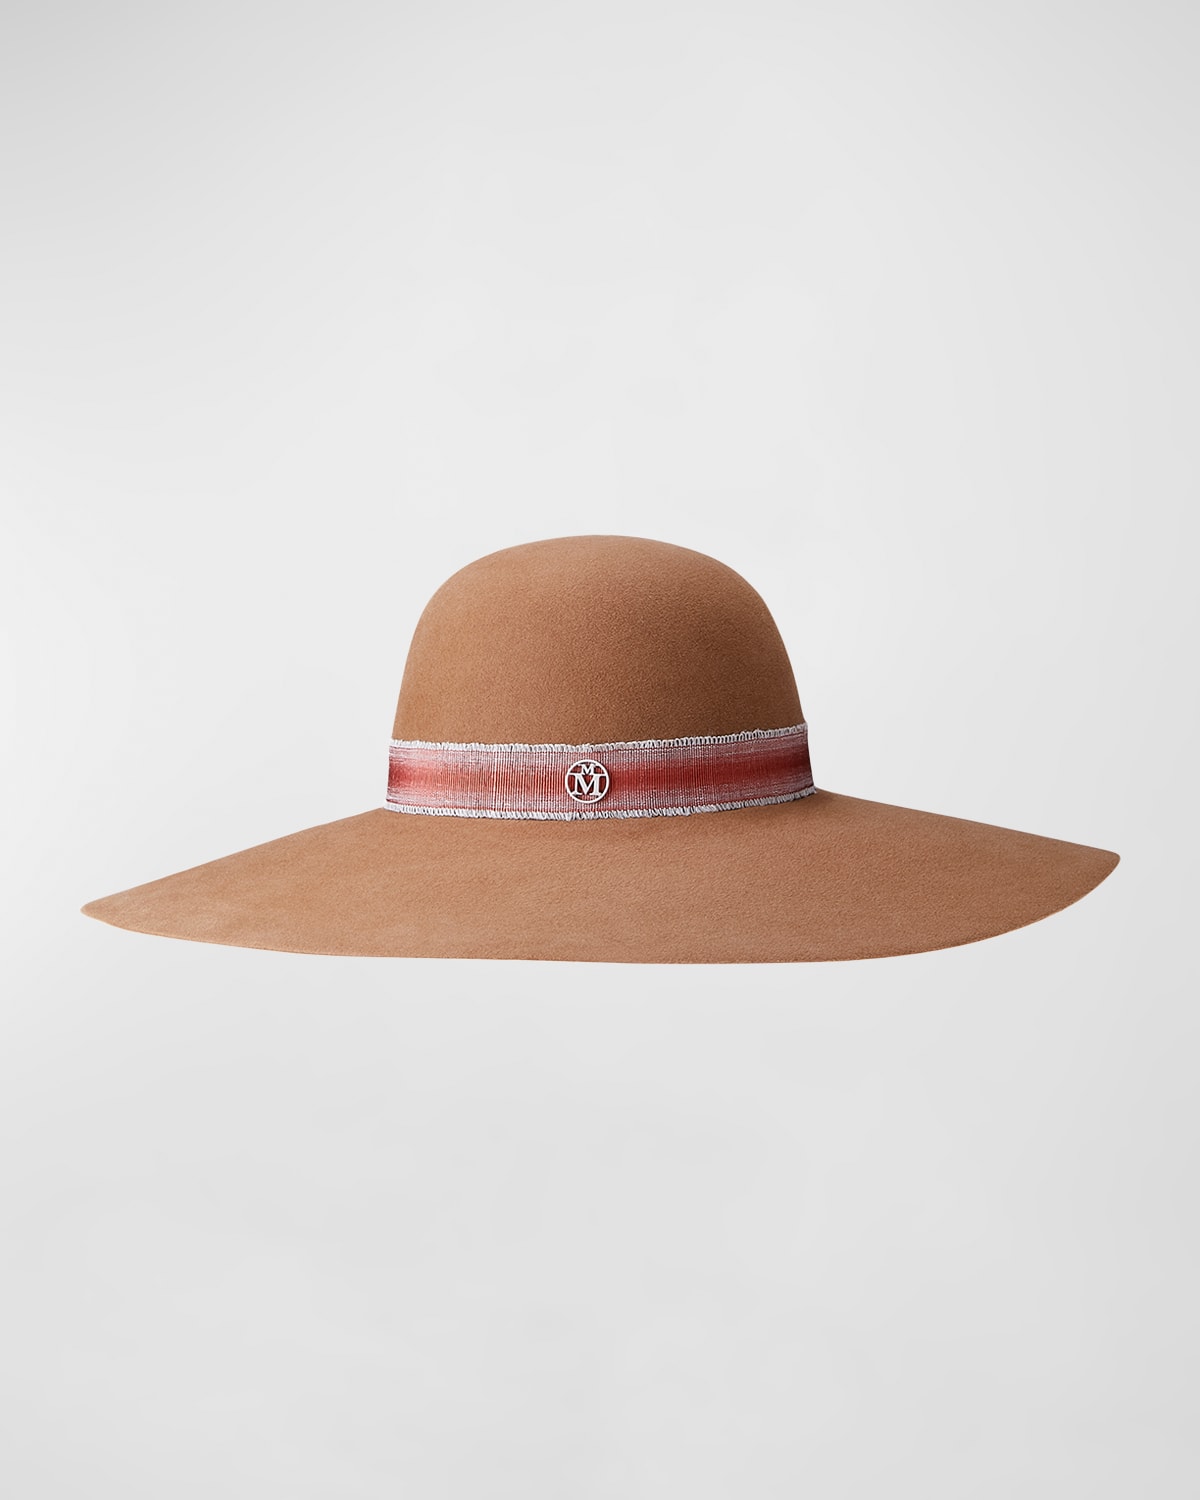 Maison Michel Blanche Felted Sun Hat In True Camel